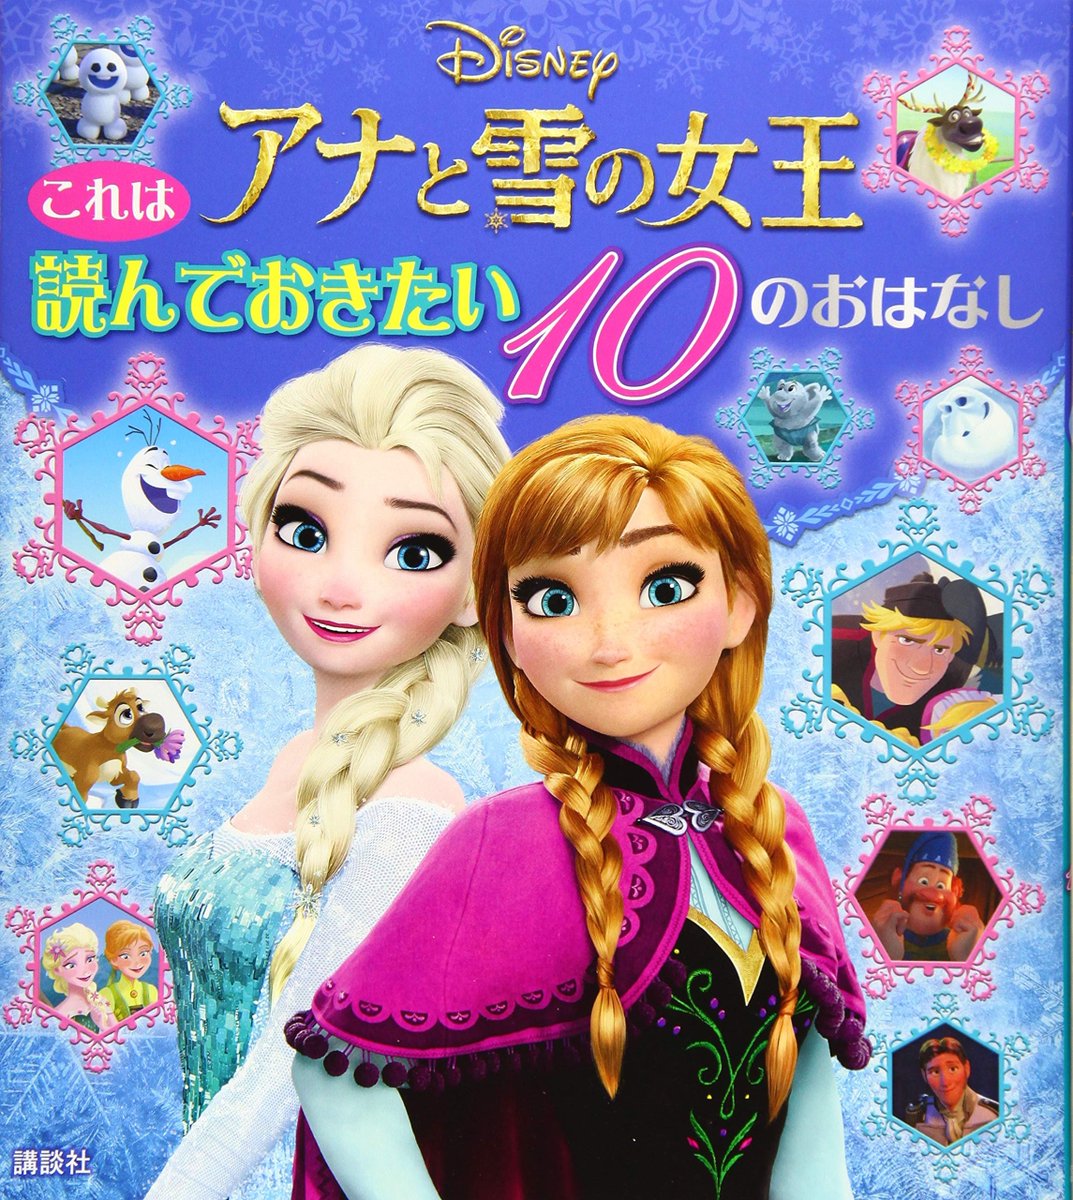  #Frozen japanese storybook x2 #アナと雪の女王  #アナ雪これは 読んでおきたい アナと雪の女王 10のおはなし2019/10/2 講談社 120p4065171954/978-4065171950 https://www.amazon.co.jp/dp/4065171954/ アナと雪の女王 6つのおはなし2019/10/3 ポプラ社 231p4591163911/978-4591163917 https://www.amazon.co.jp/dp/4591163911/ 